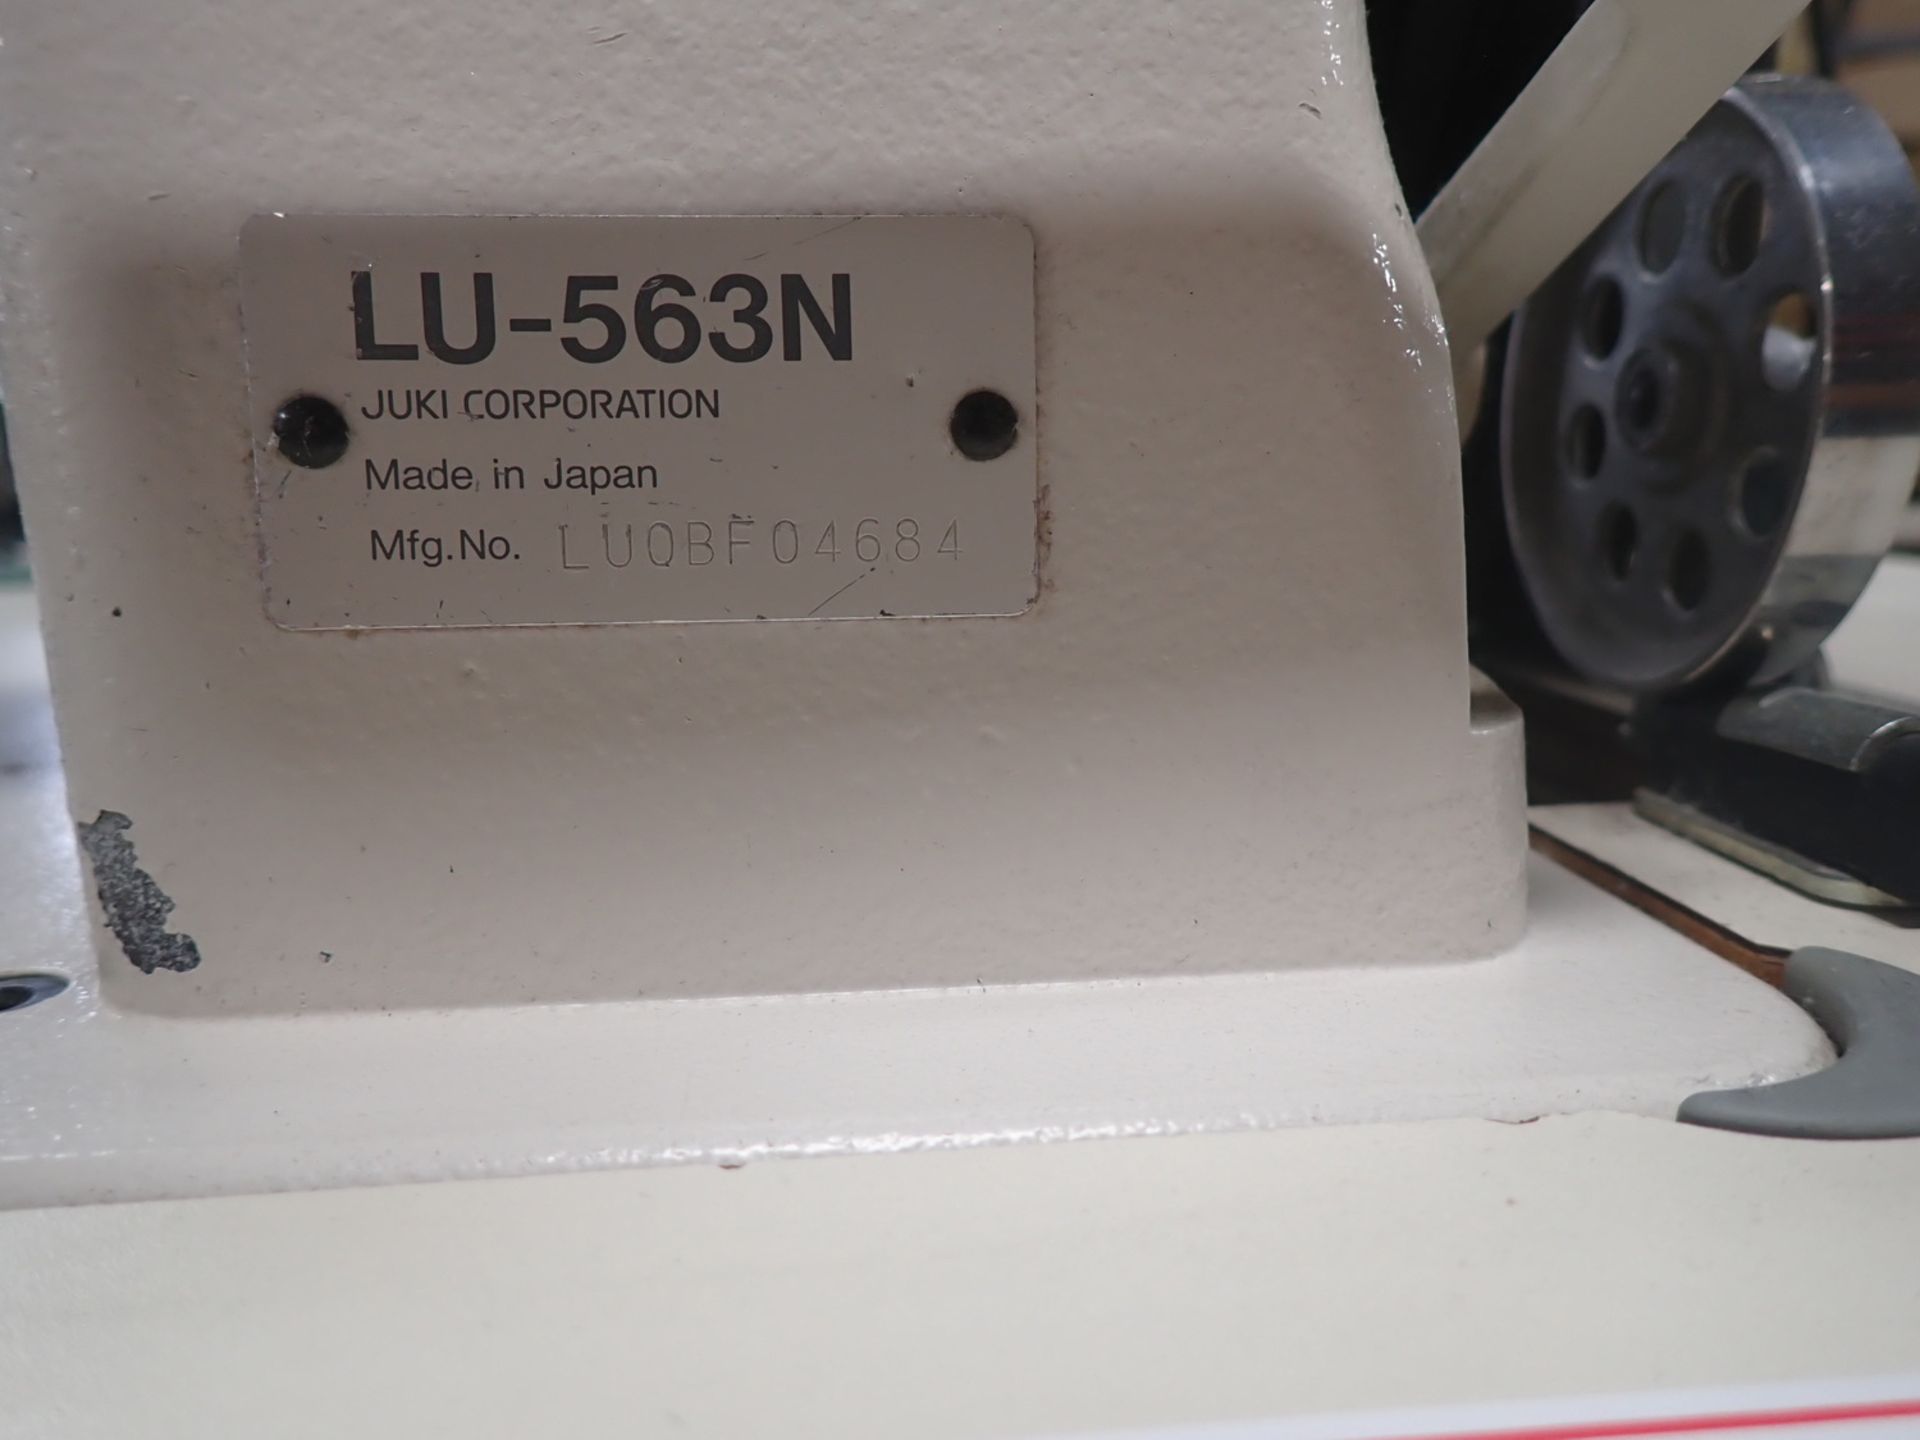 JUKI LU-563N SINGLE NEEDLE WLAKING FOOT MACHINE, S/N LUOBFO4684 W/ 12 BOBBINS, NEEDLES & PIPING FOOR - Image 2 of 9